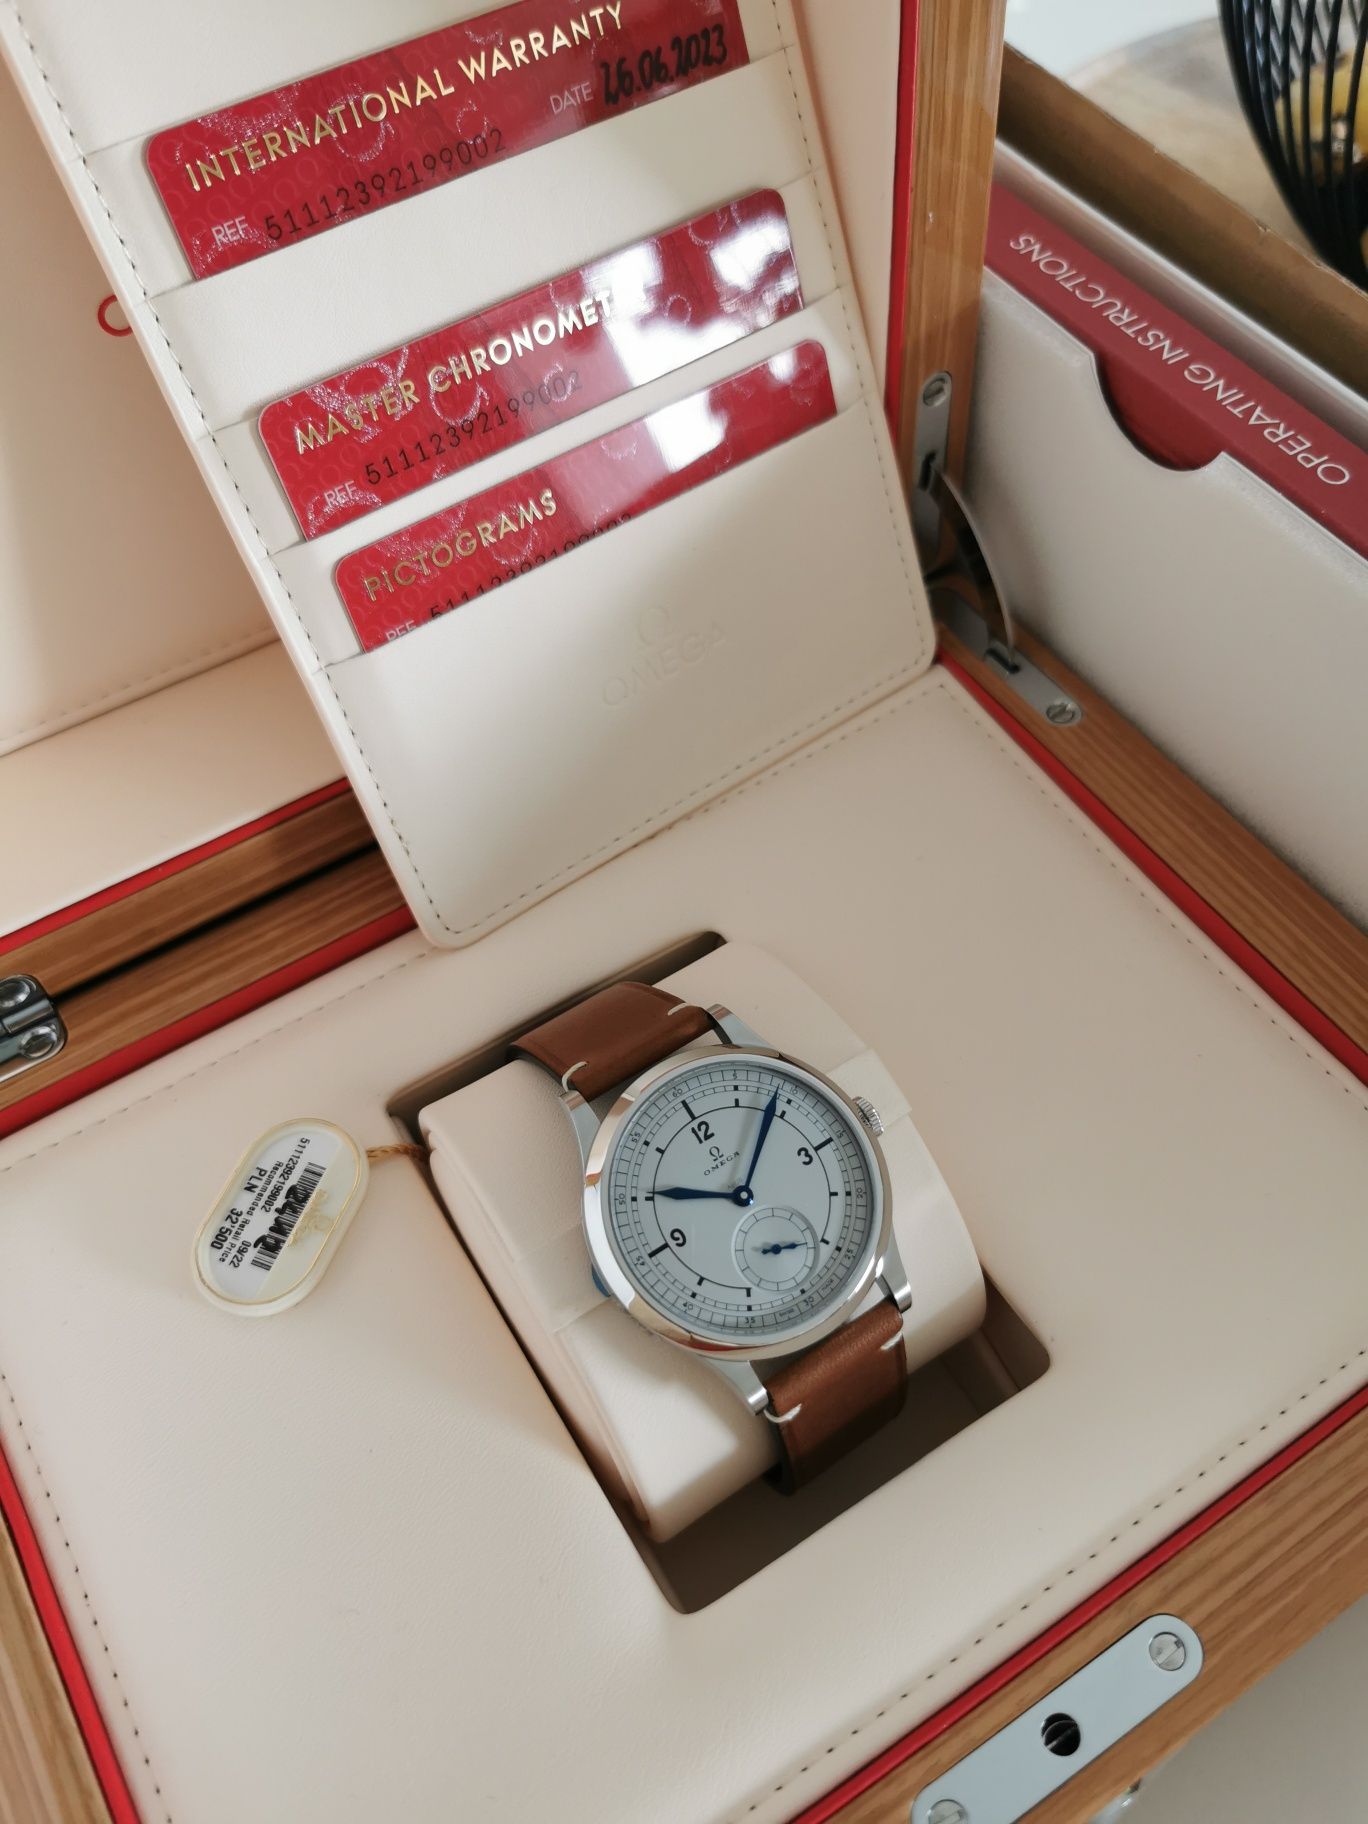 Zegarek Omega Specialities Ck 859 tarcza ze srebra Ag 925 nowy! W.Kruk